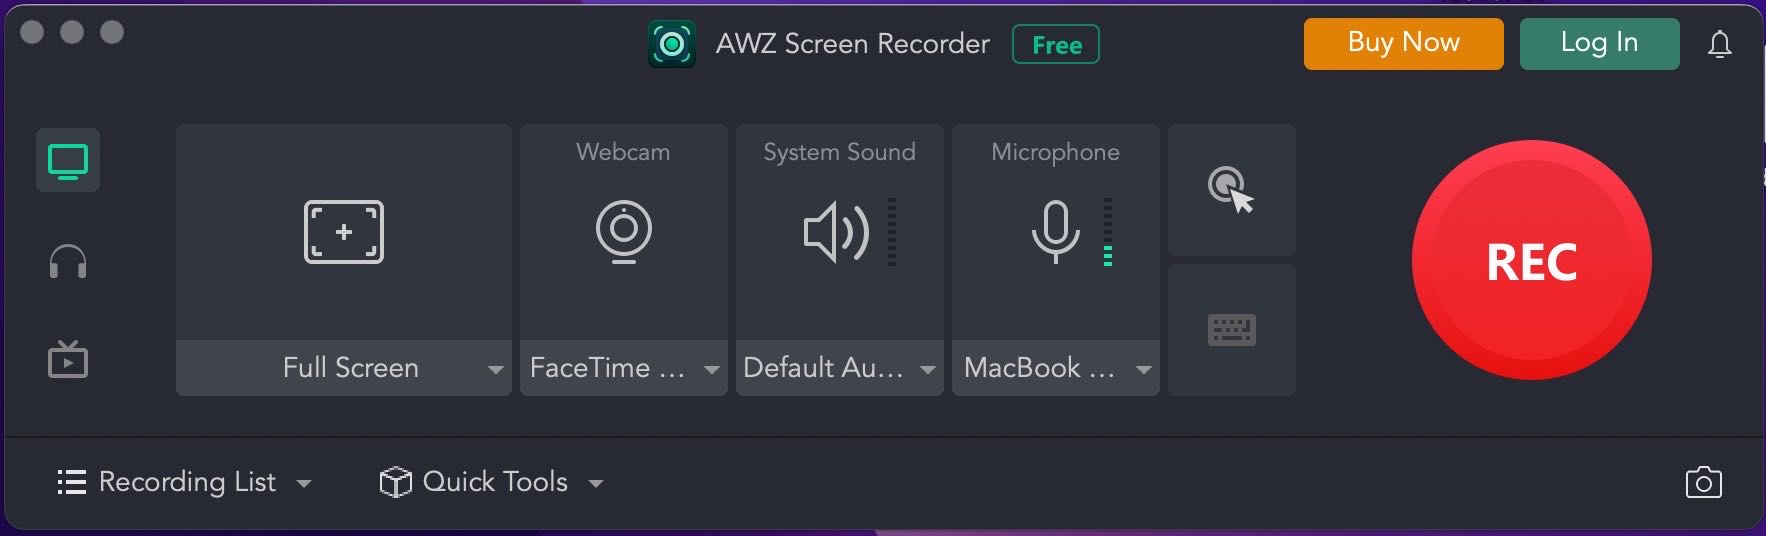 AWZ Screen Recorder for Mac